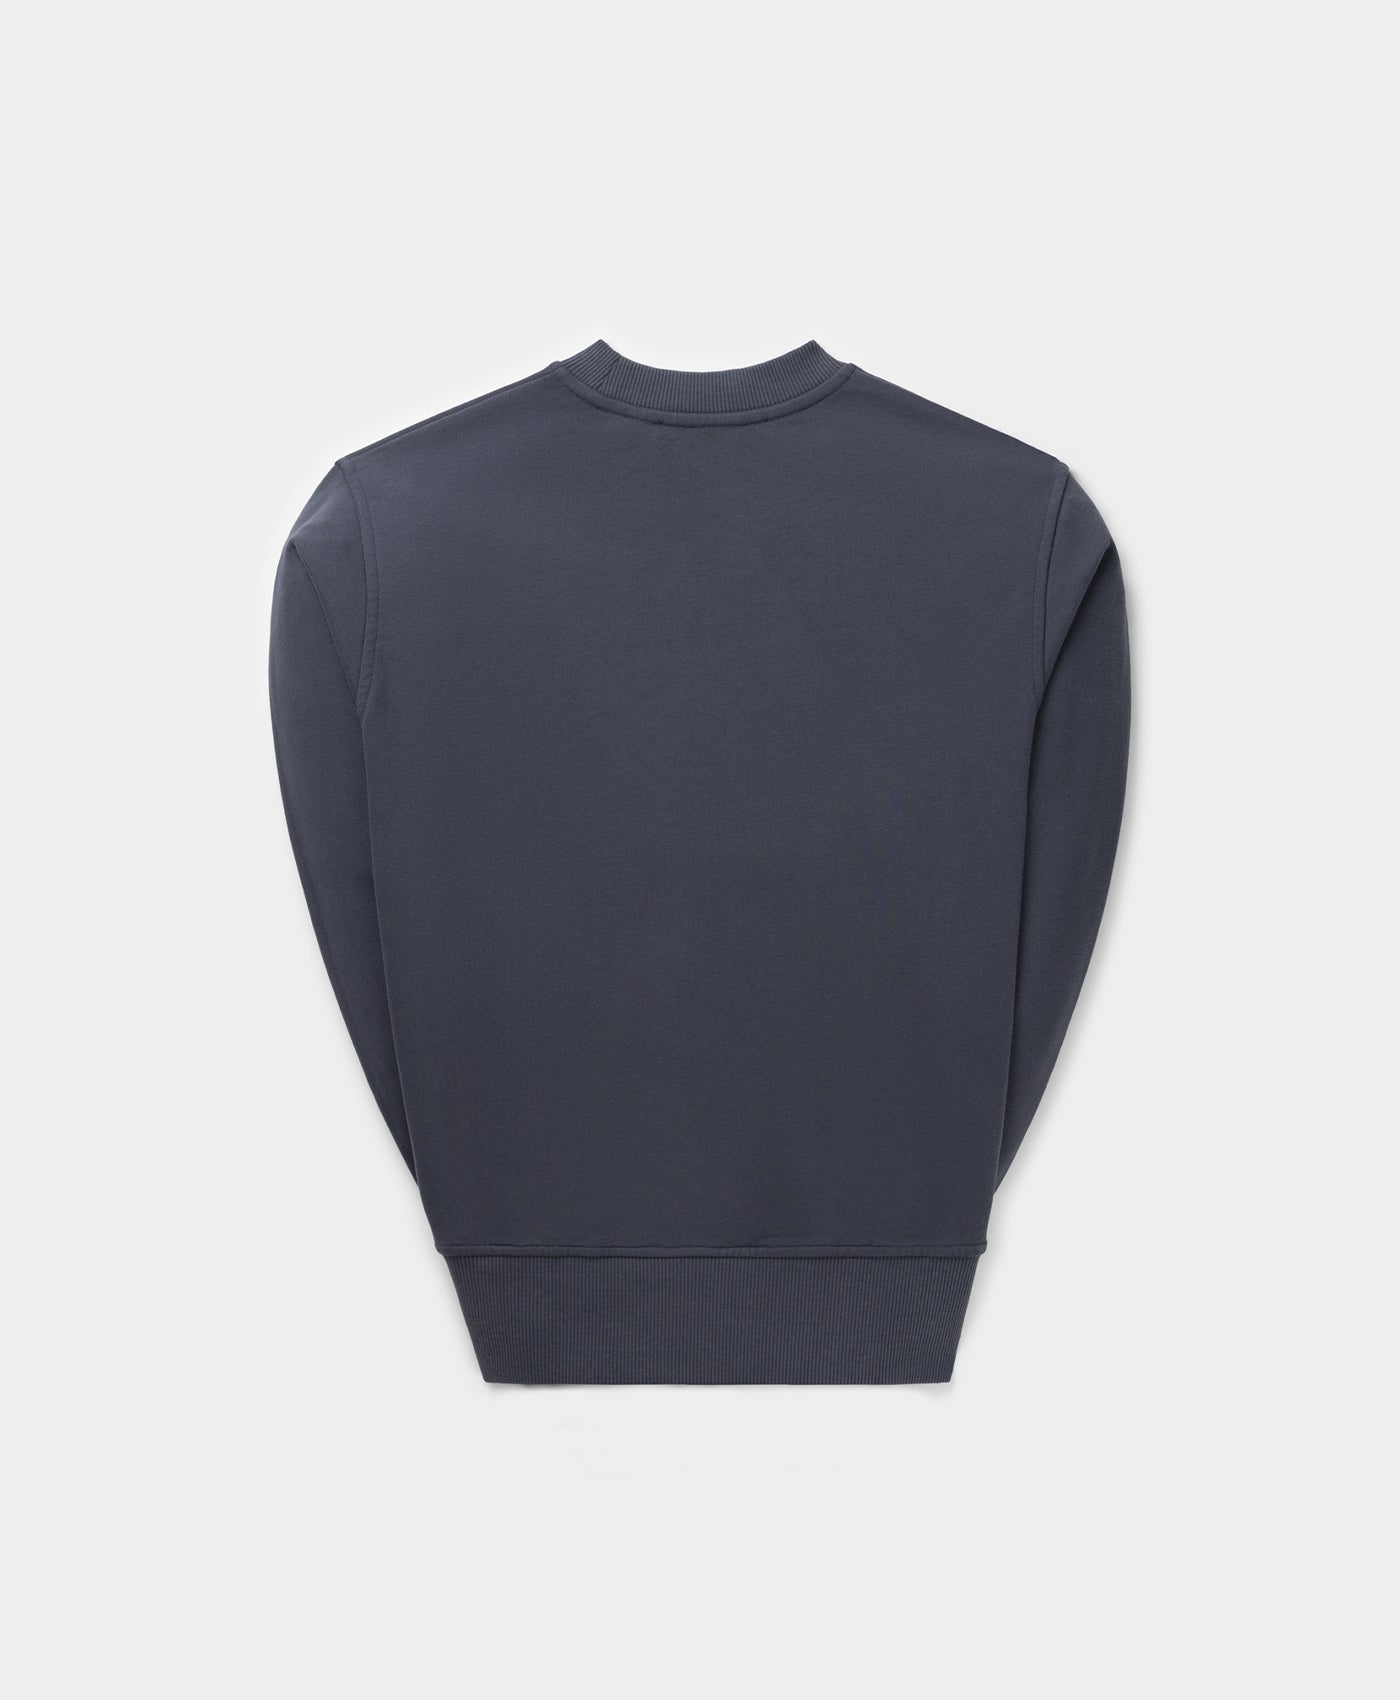 DP - Odyssey Blue Escript Sweater - Packshot - Rear